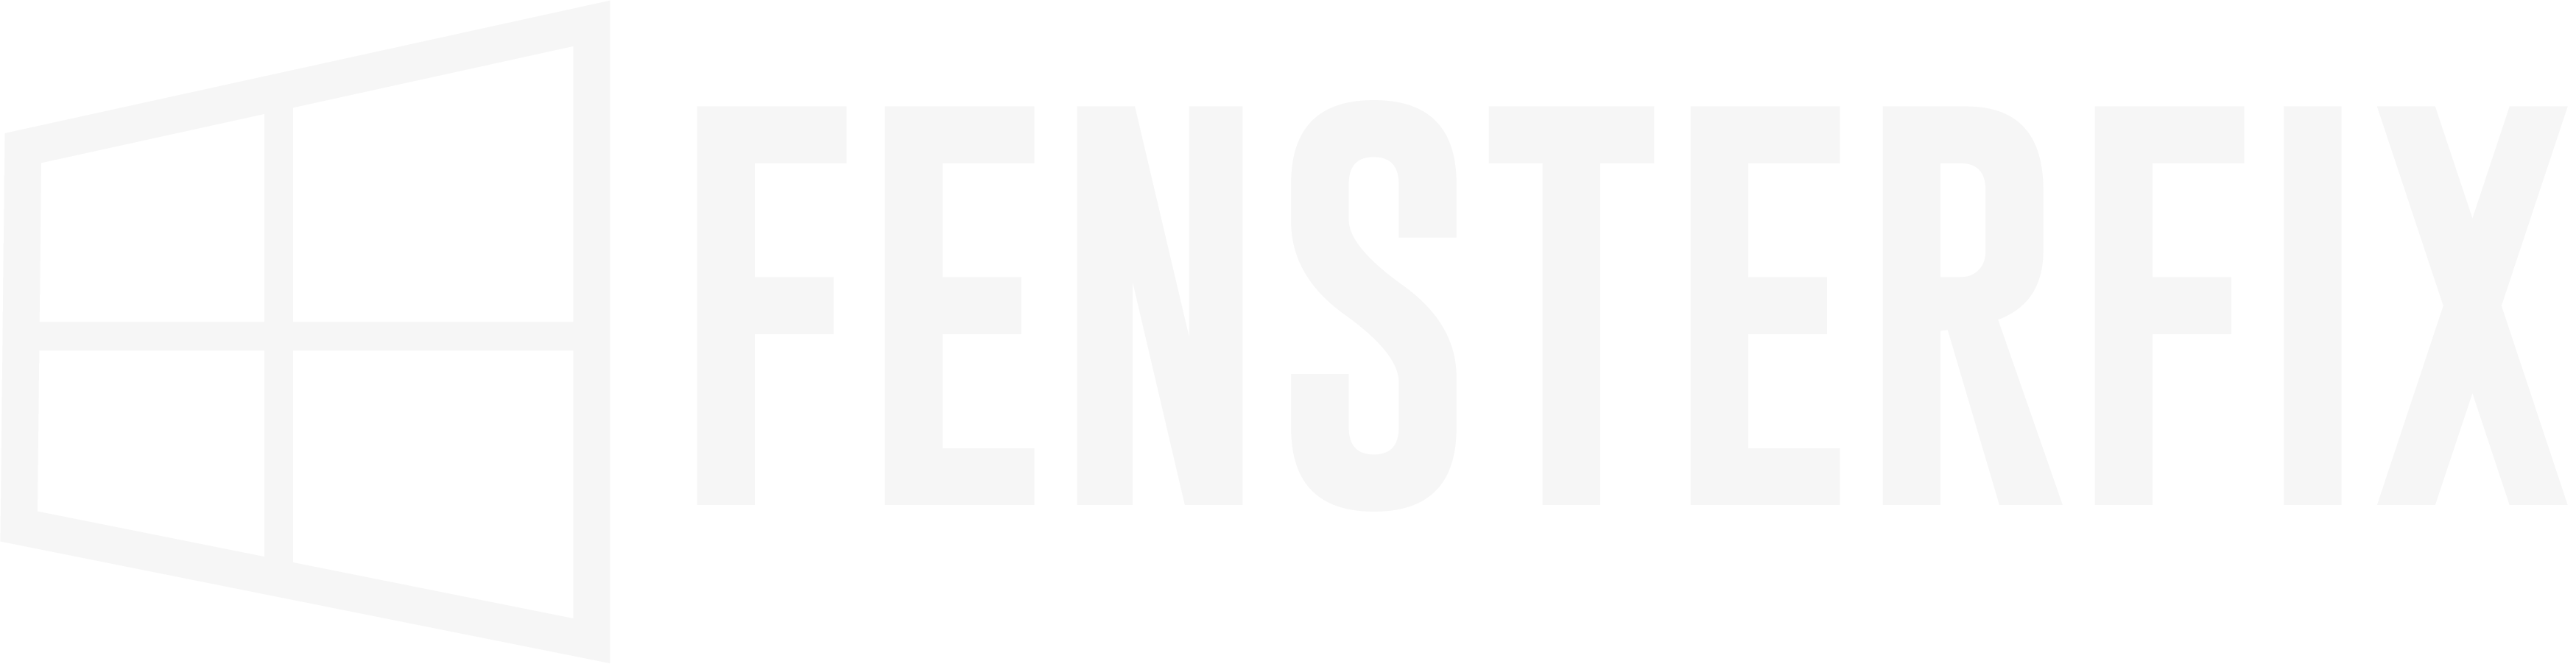 FensterFix logo